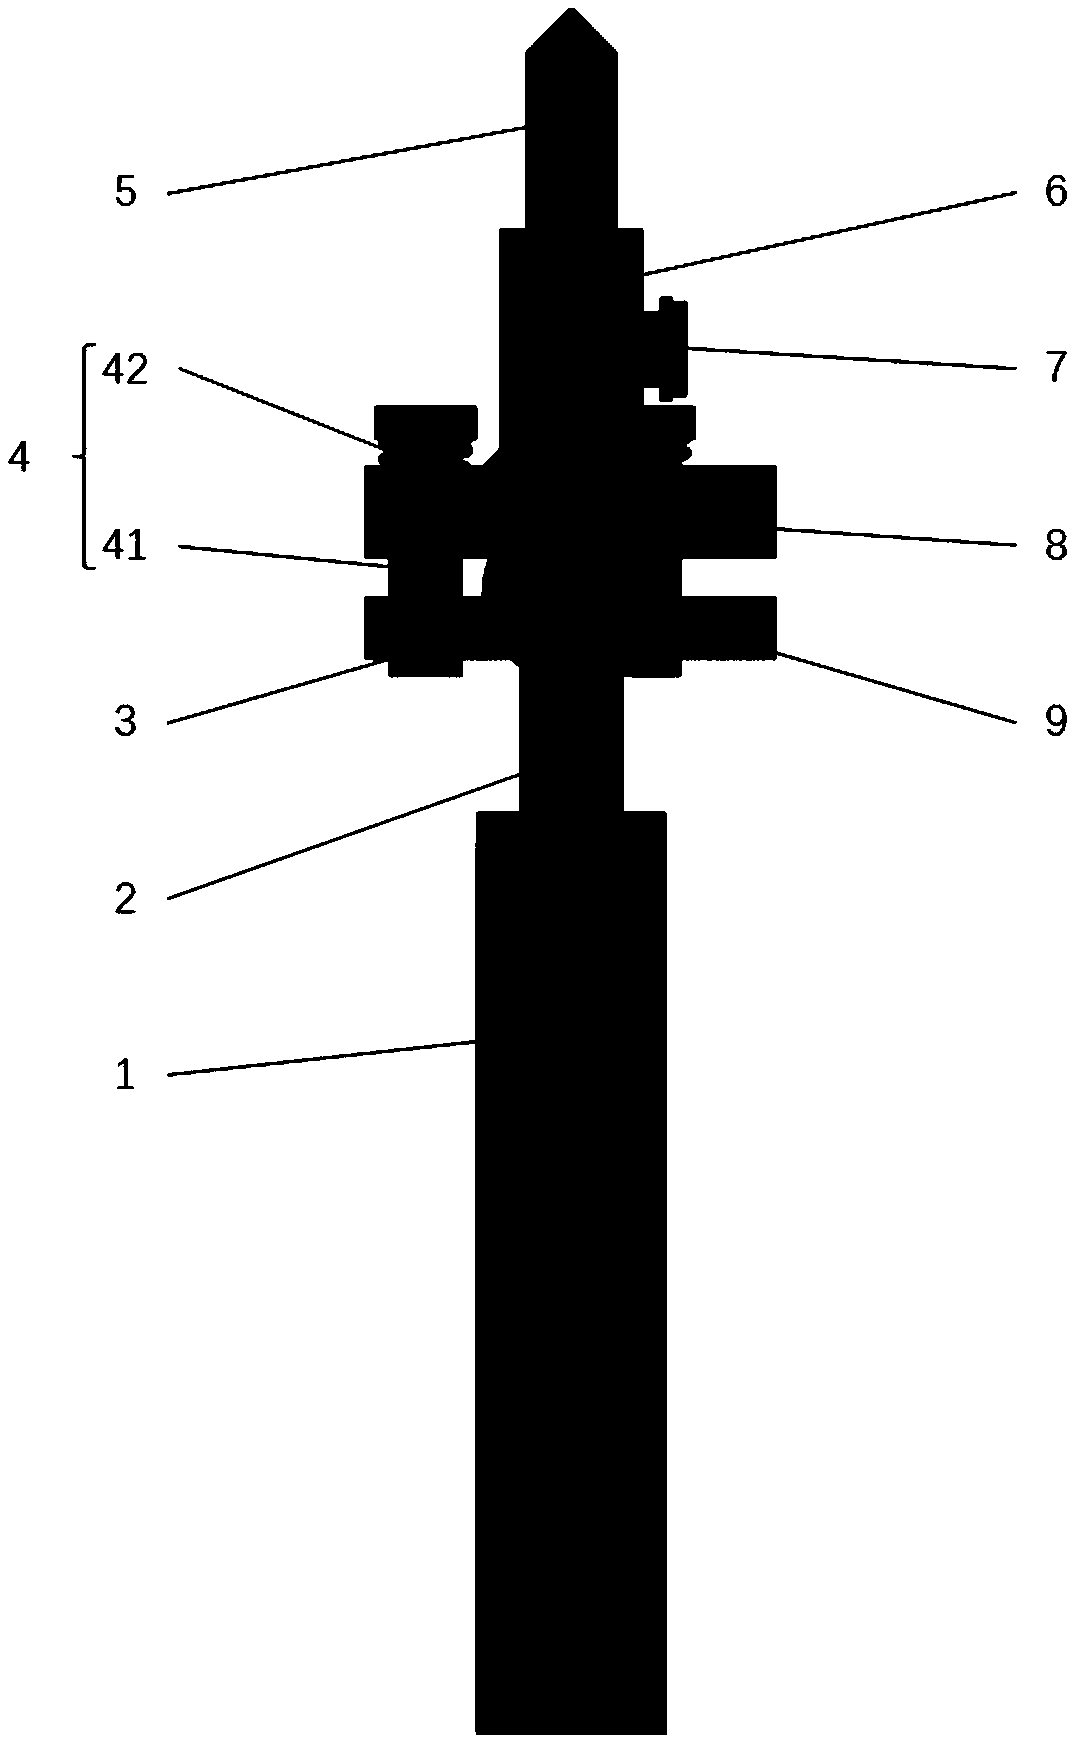 Multi-degree-of-freedom sample rod